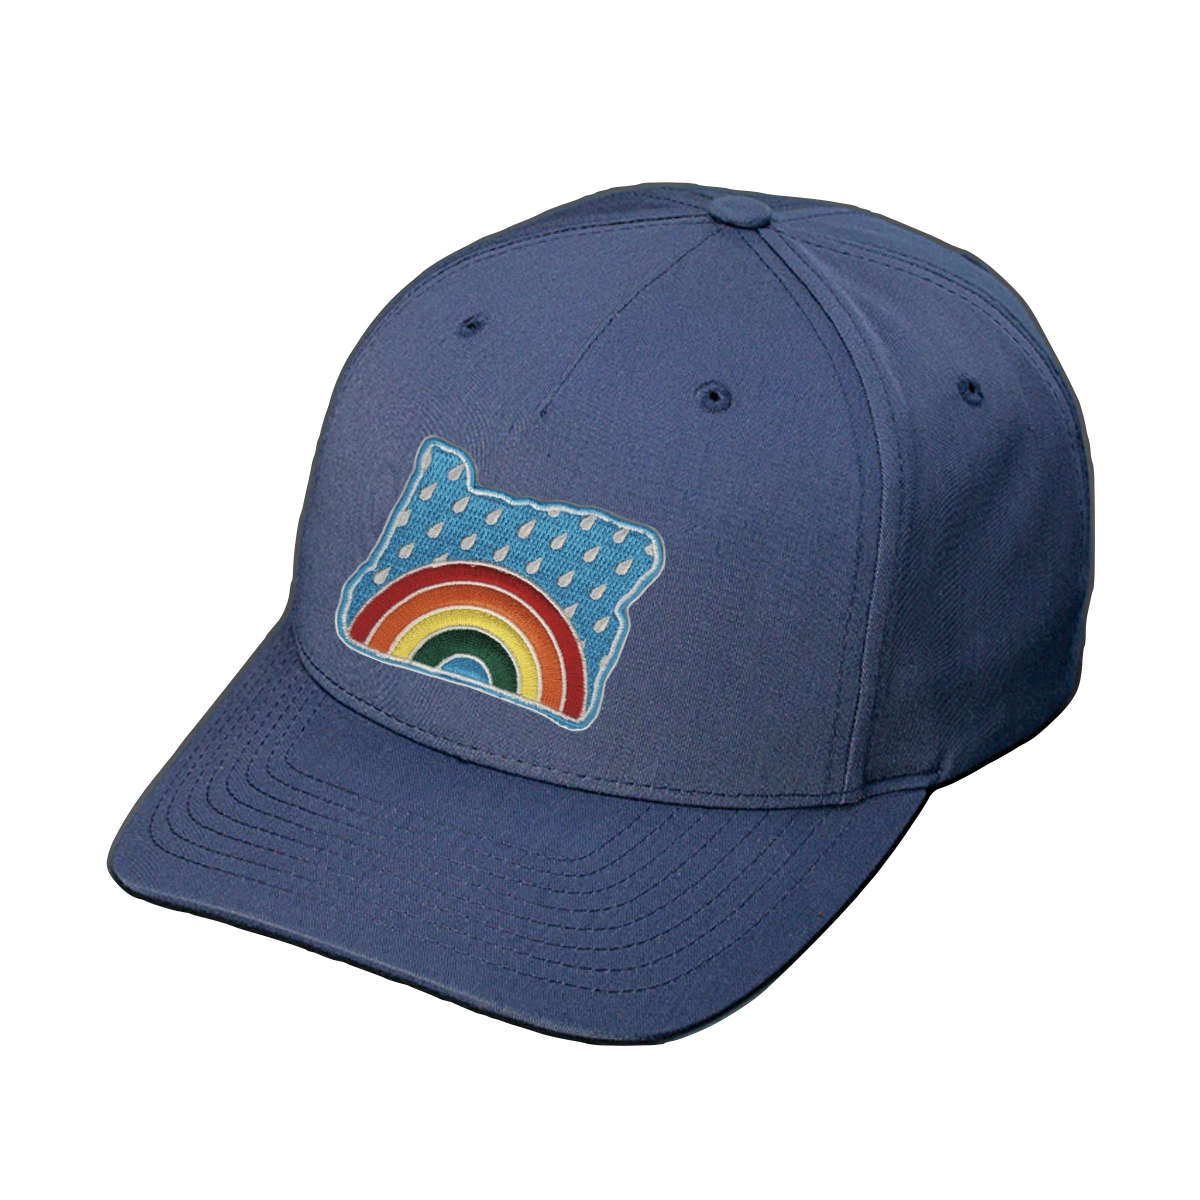 Rainbow Snapback Hat